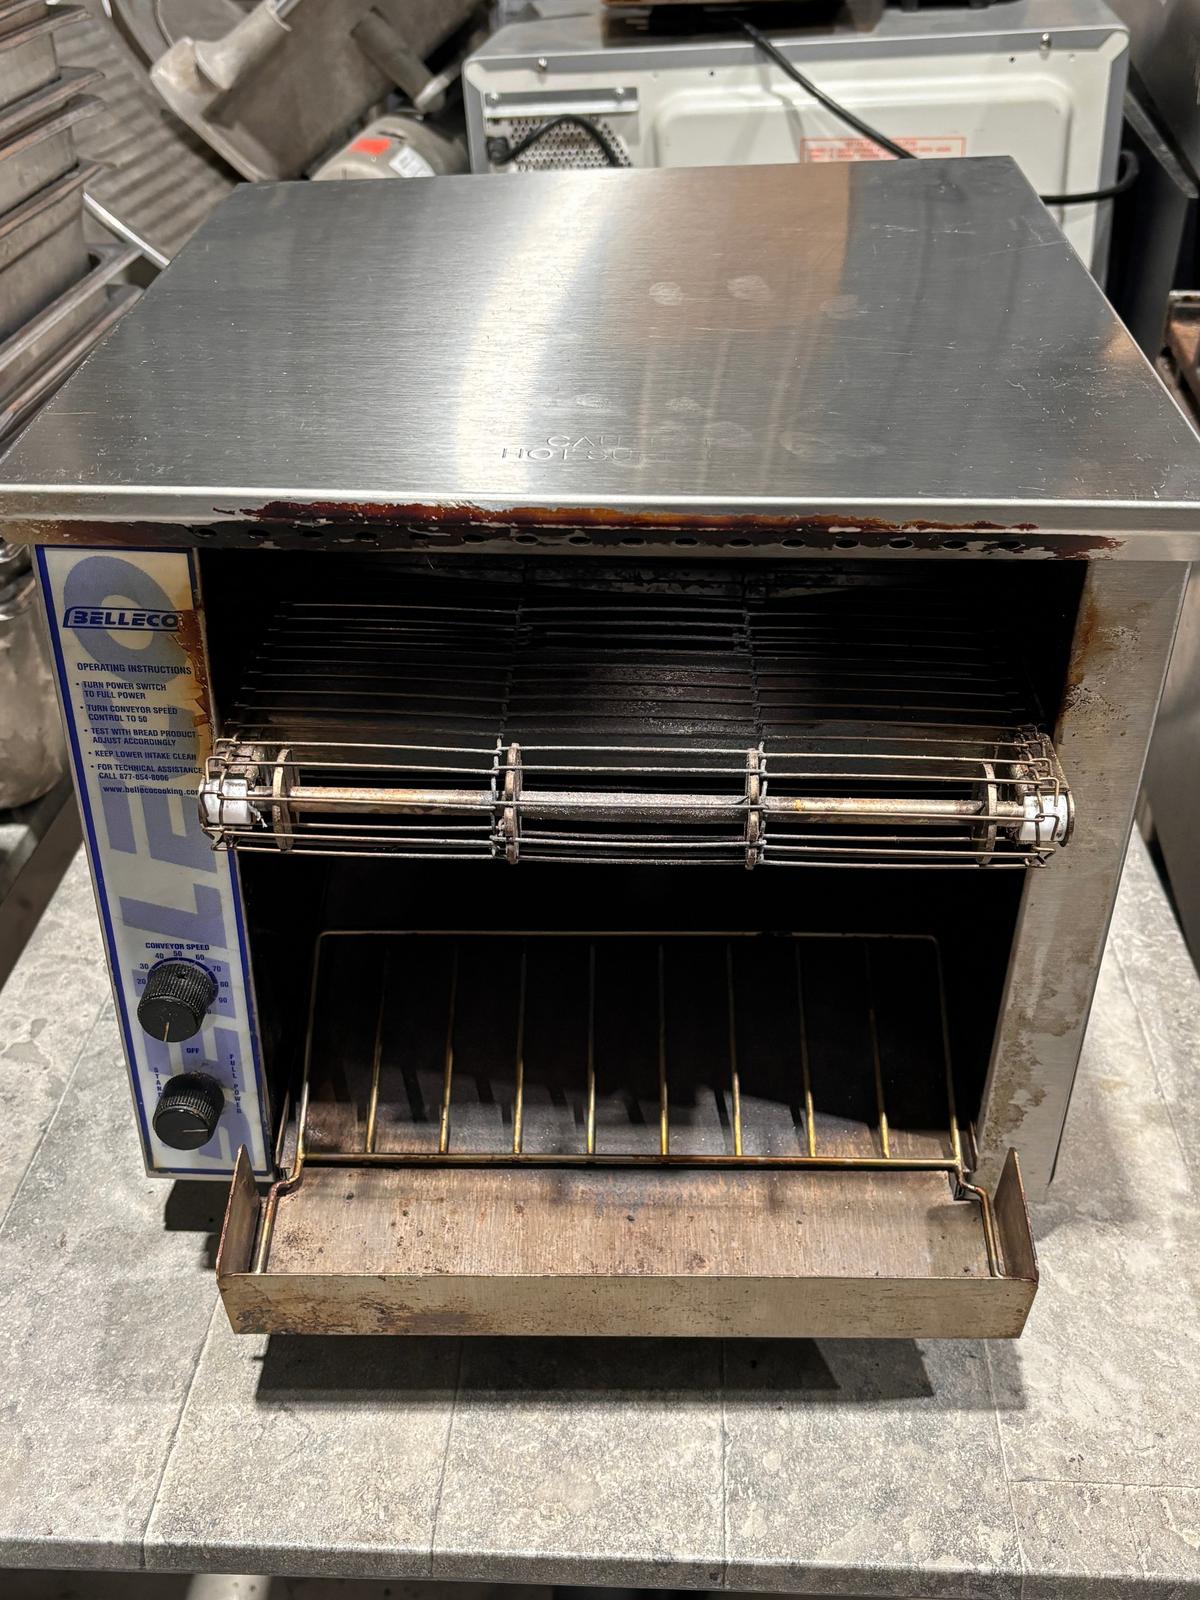 Belleco Conveyor Toaster Model# JT1